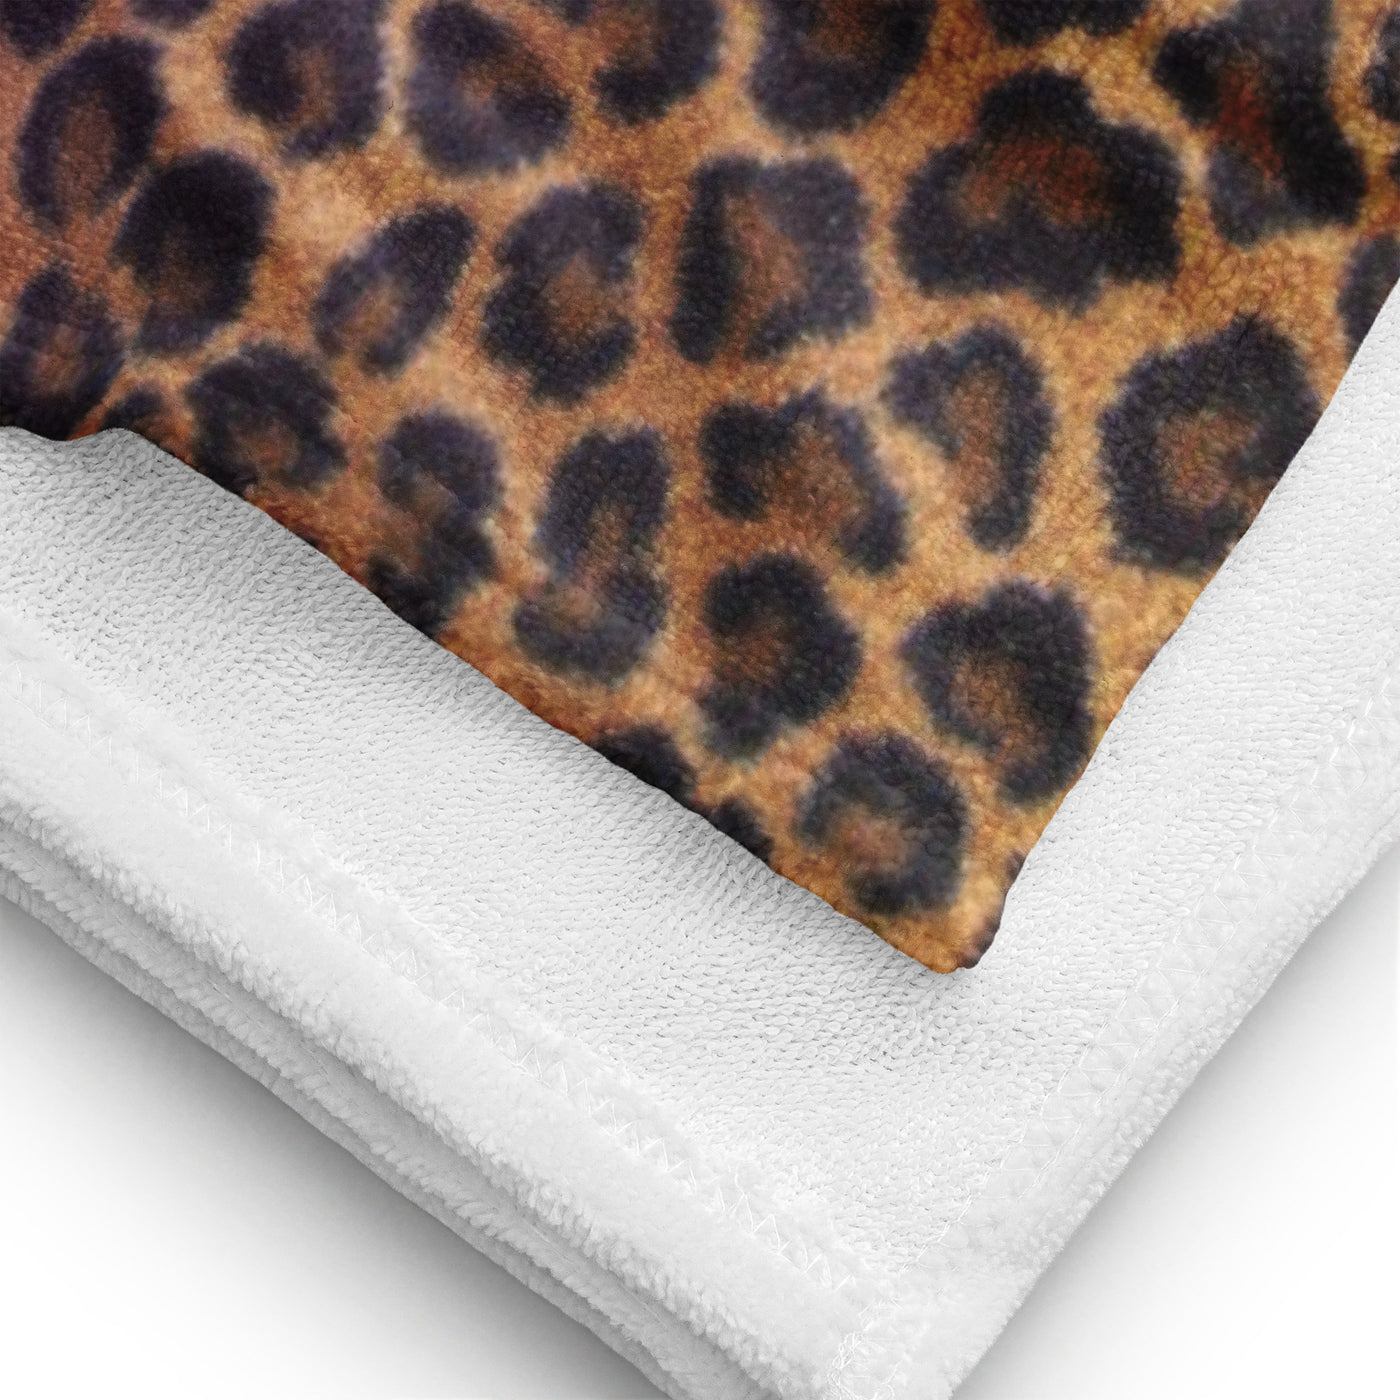 OG Beach Towel - Cheetah